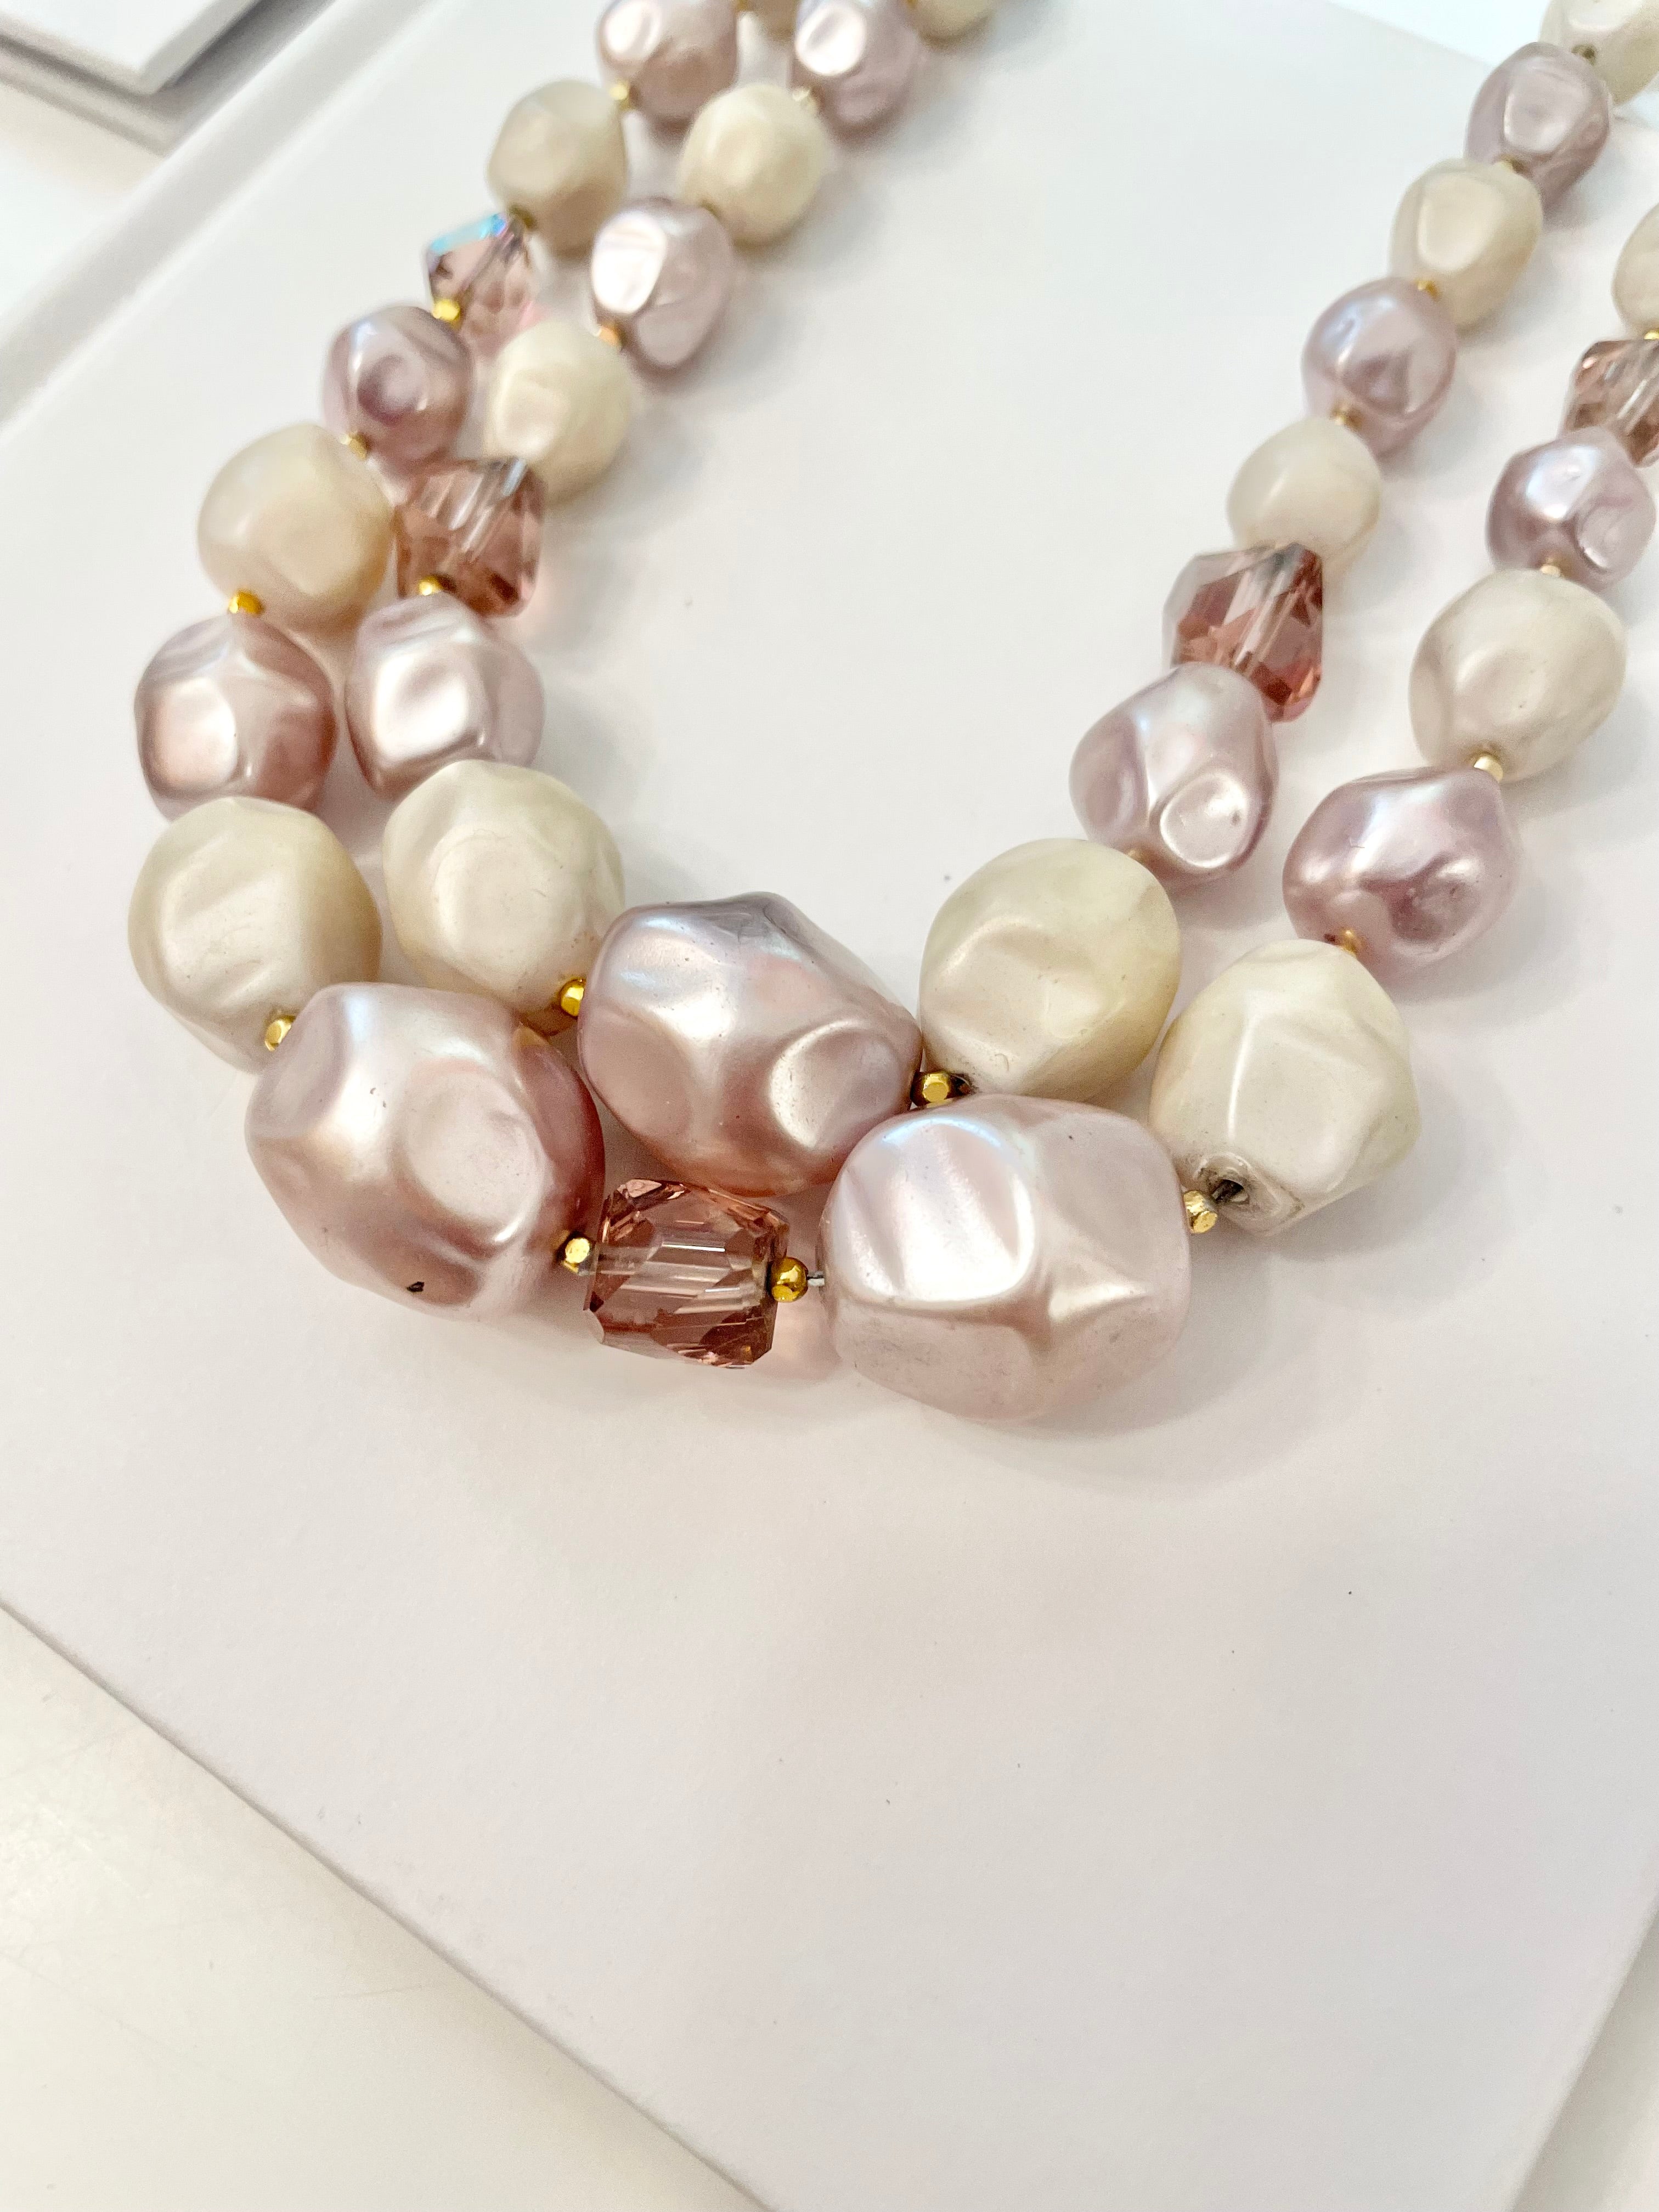 Vintage classy 1960's faux baroque pearl multi stone necklace... so feminine!